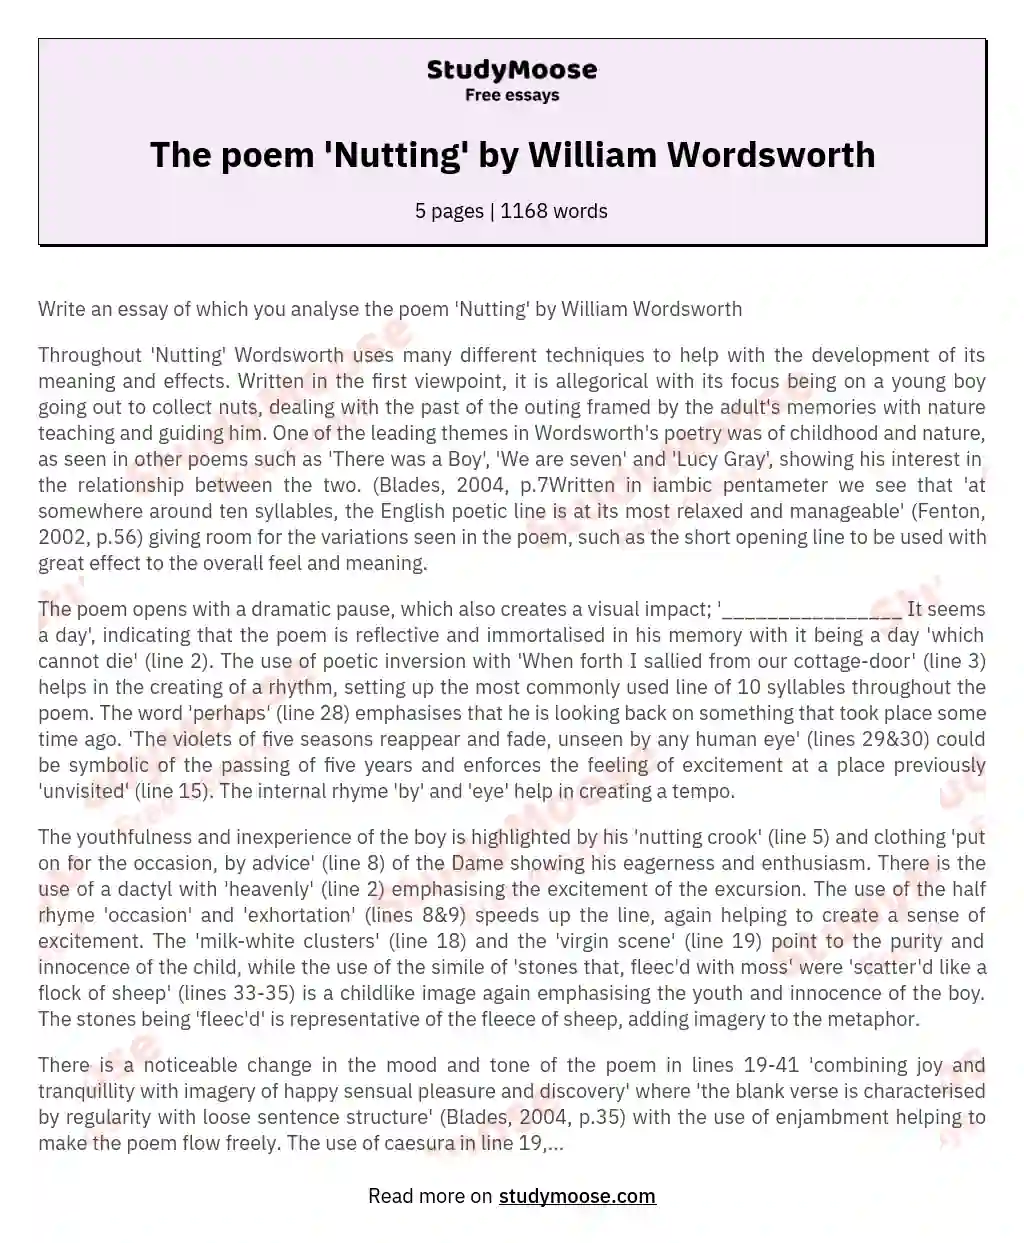 The poem 'Nutting' by William Wordsworth essay